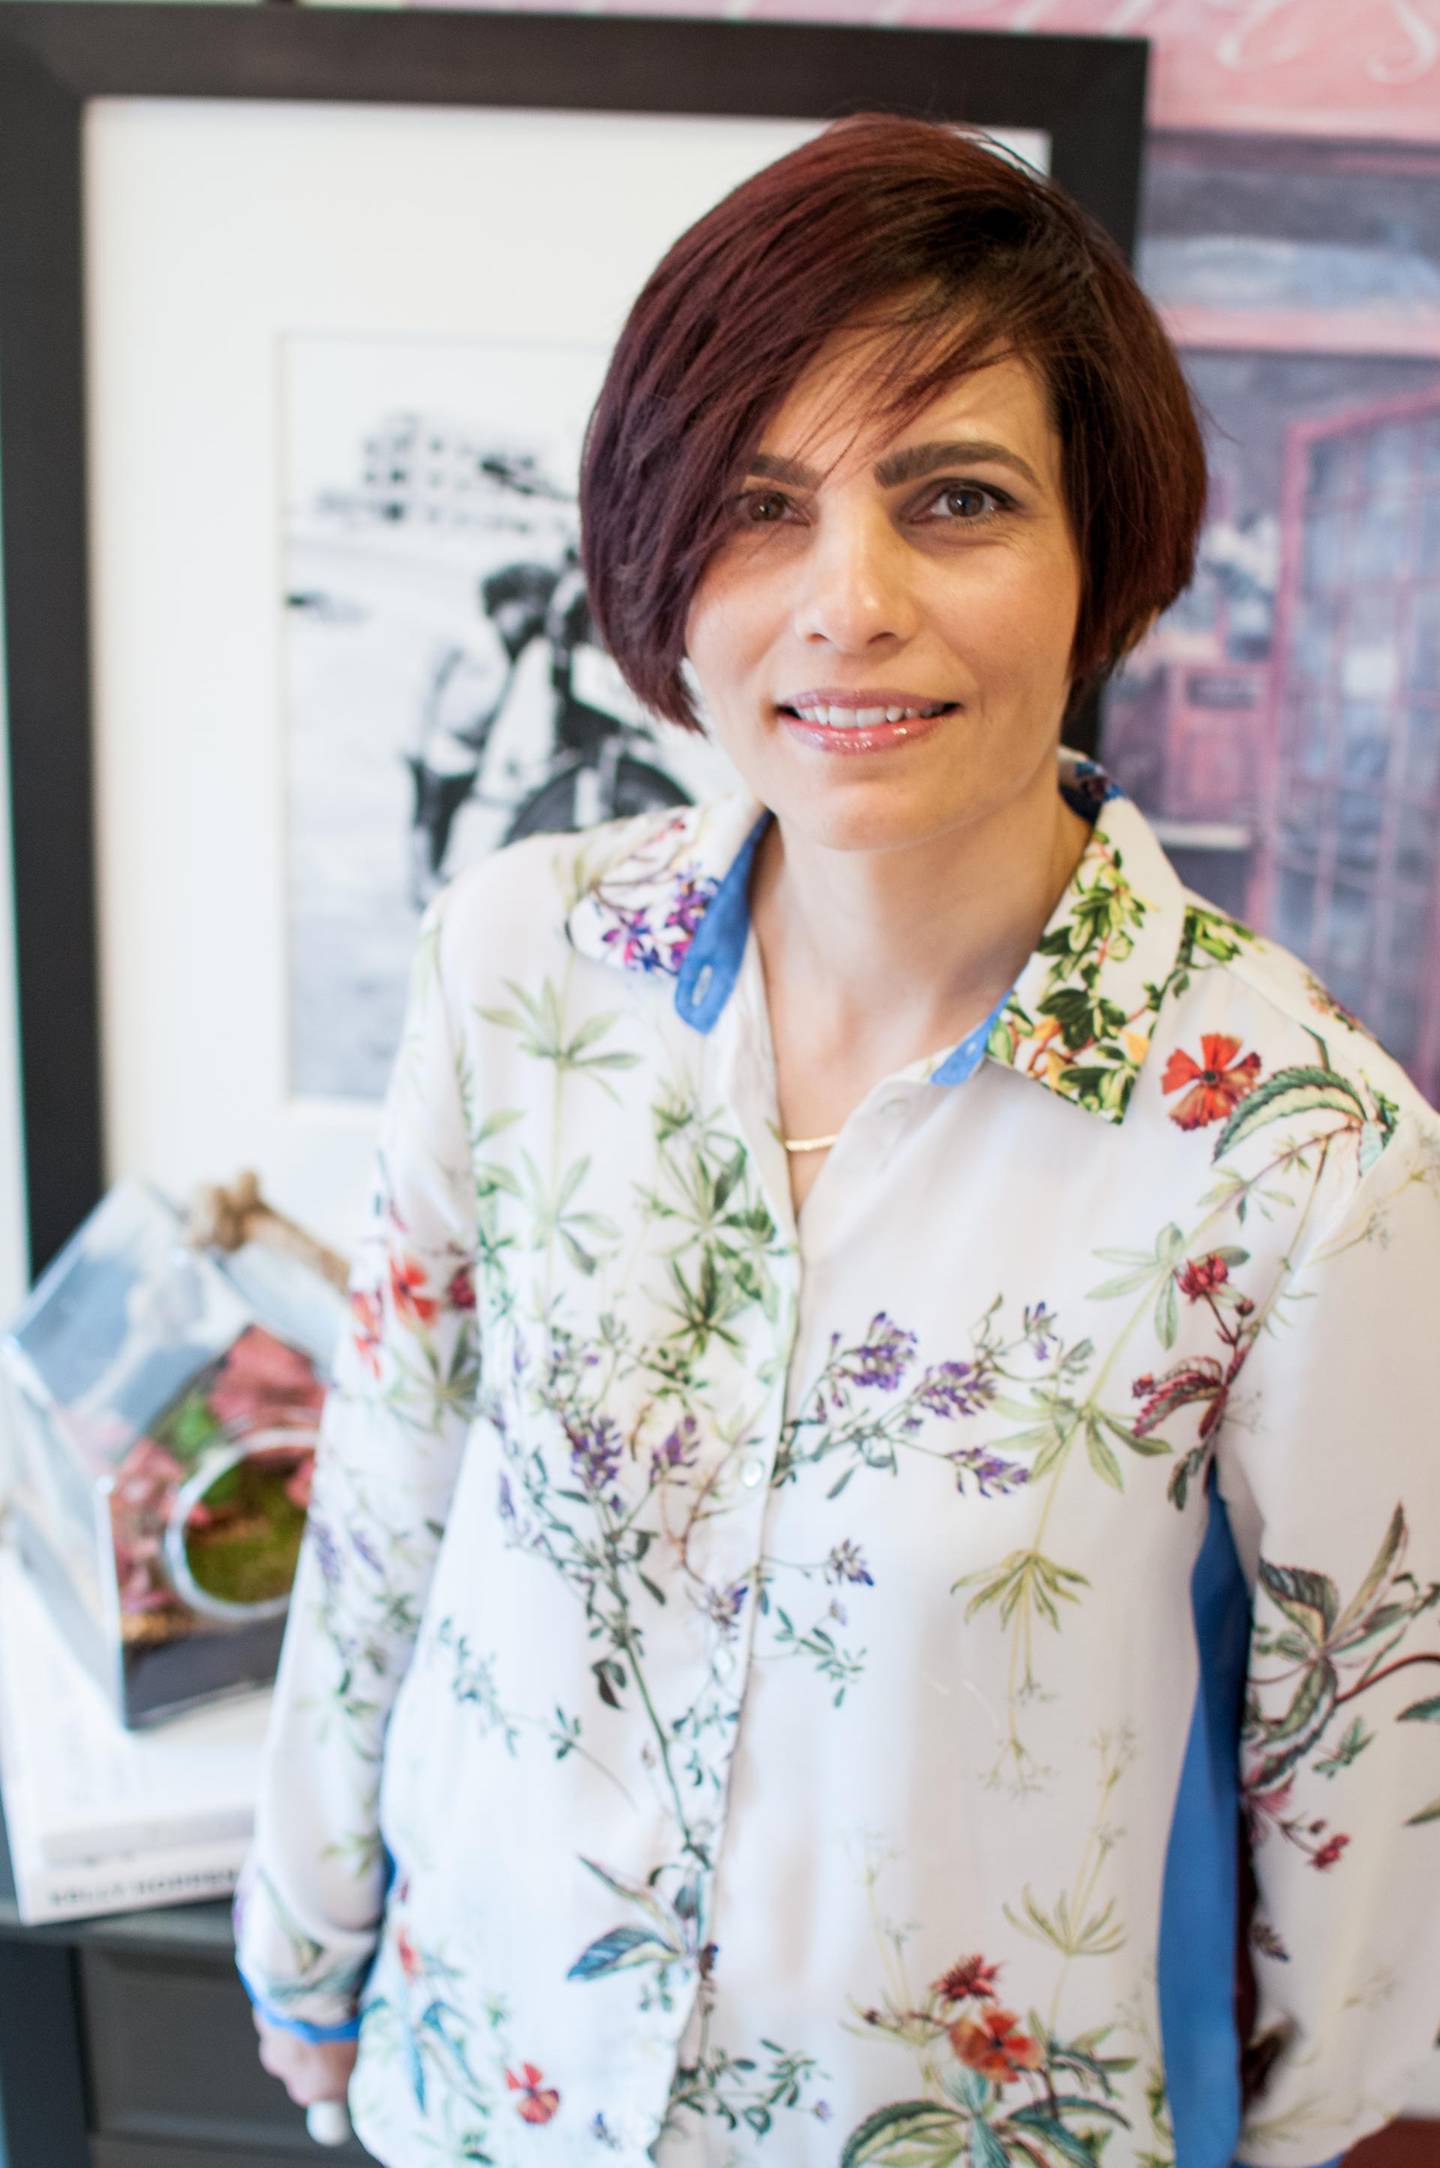 Cheryl Ann Cox is head florist at Maison des Fleurs in Dubai